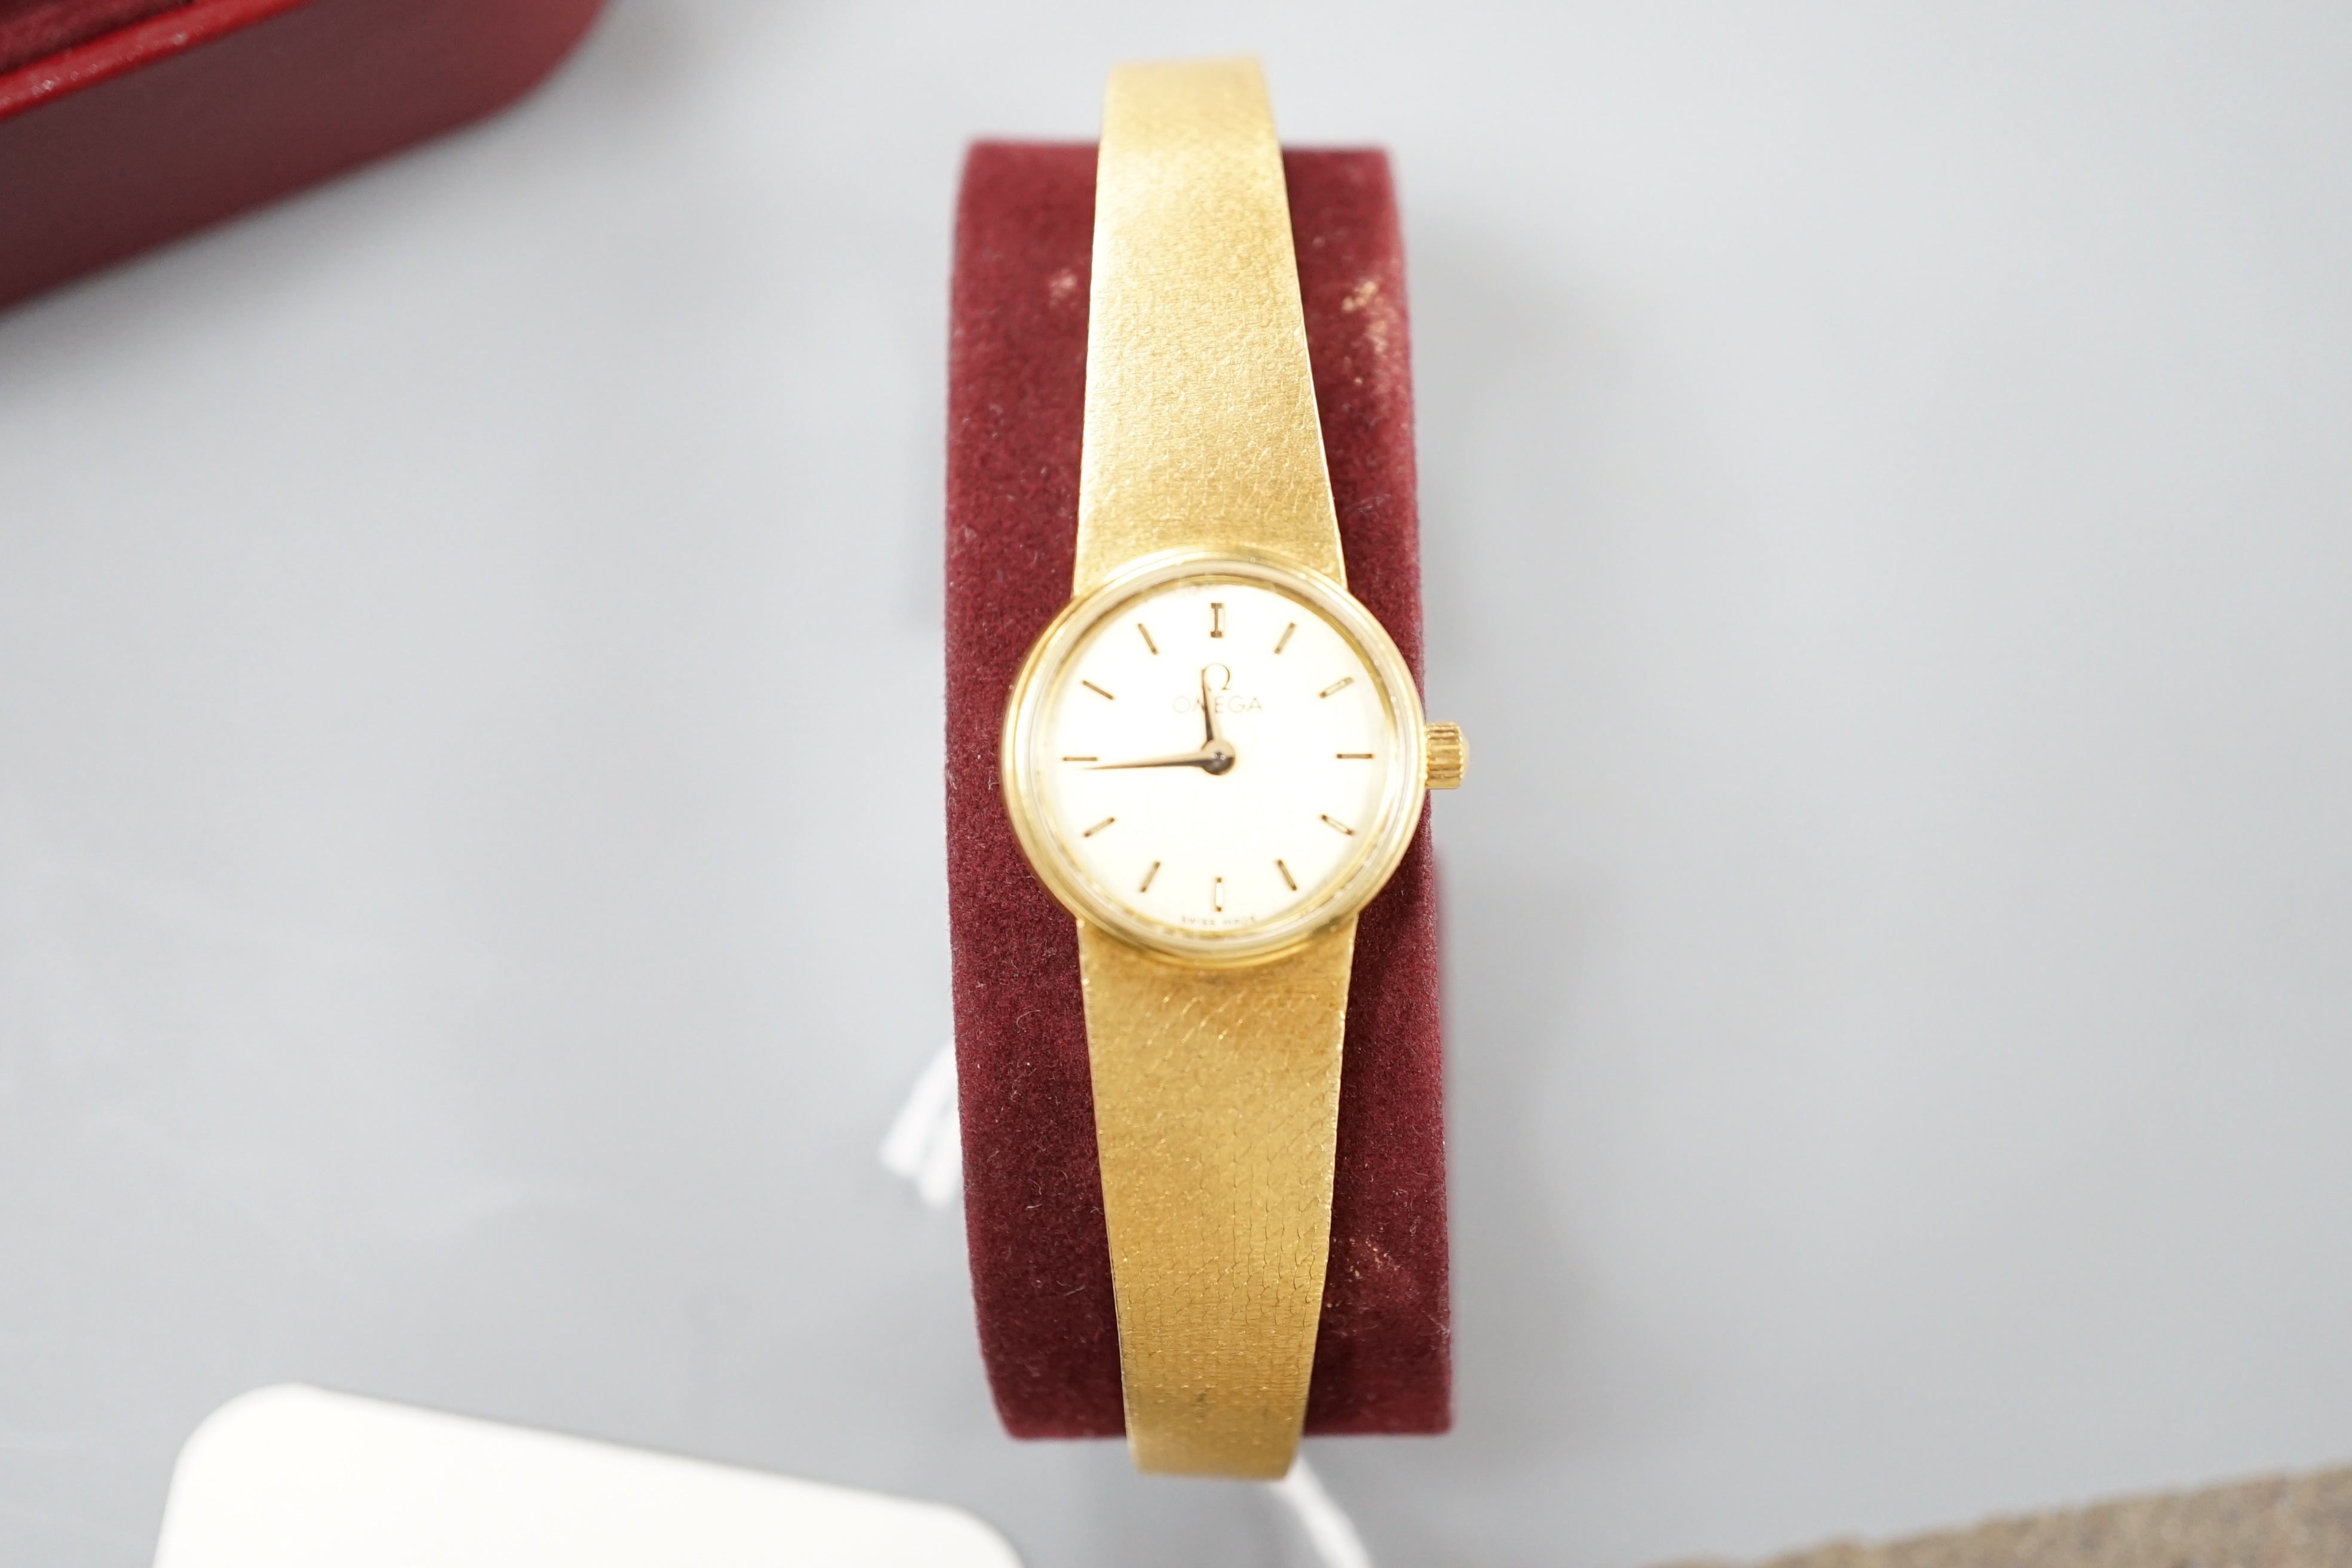 A lady's 18ct gold Omega quartz wrist watch